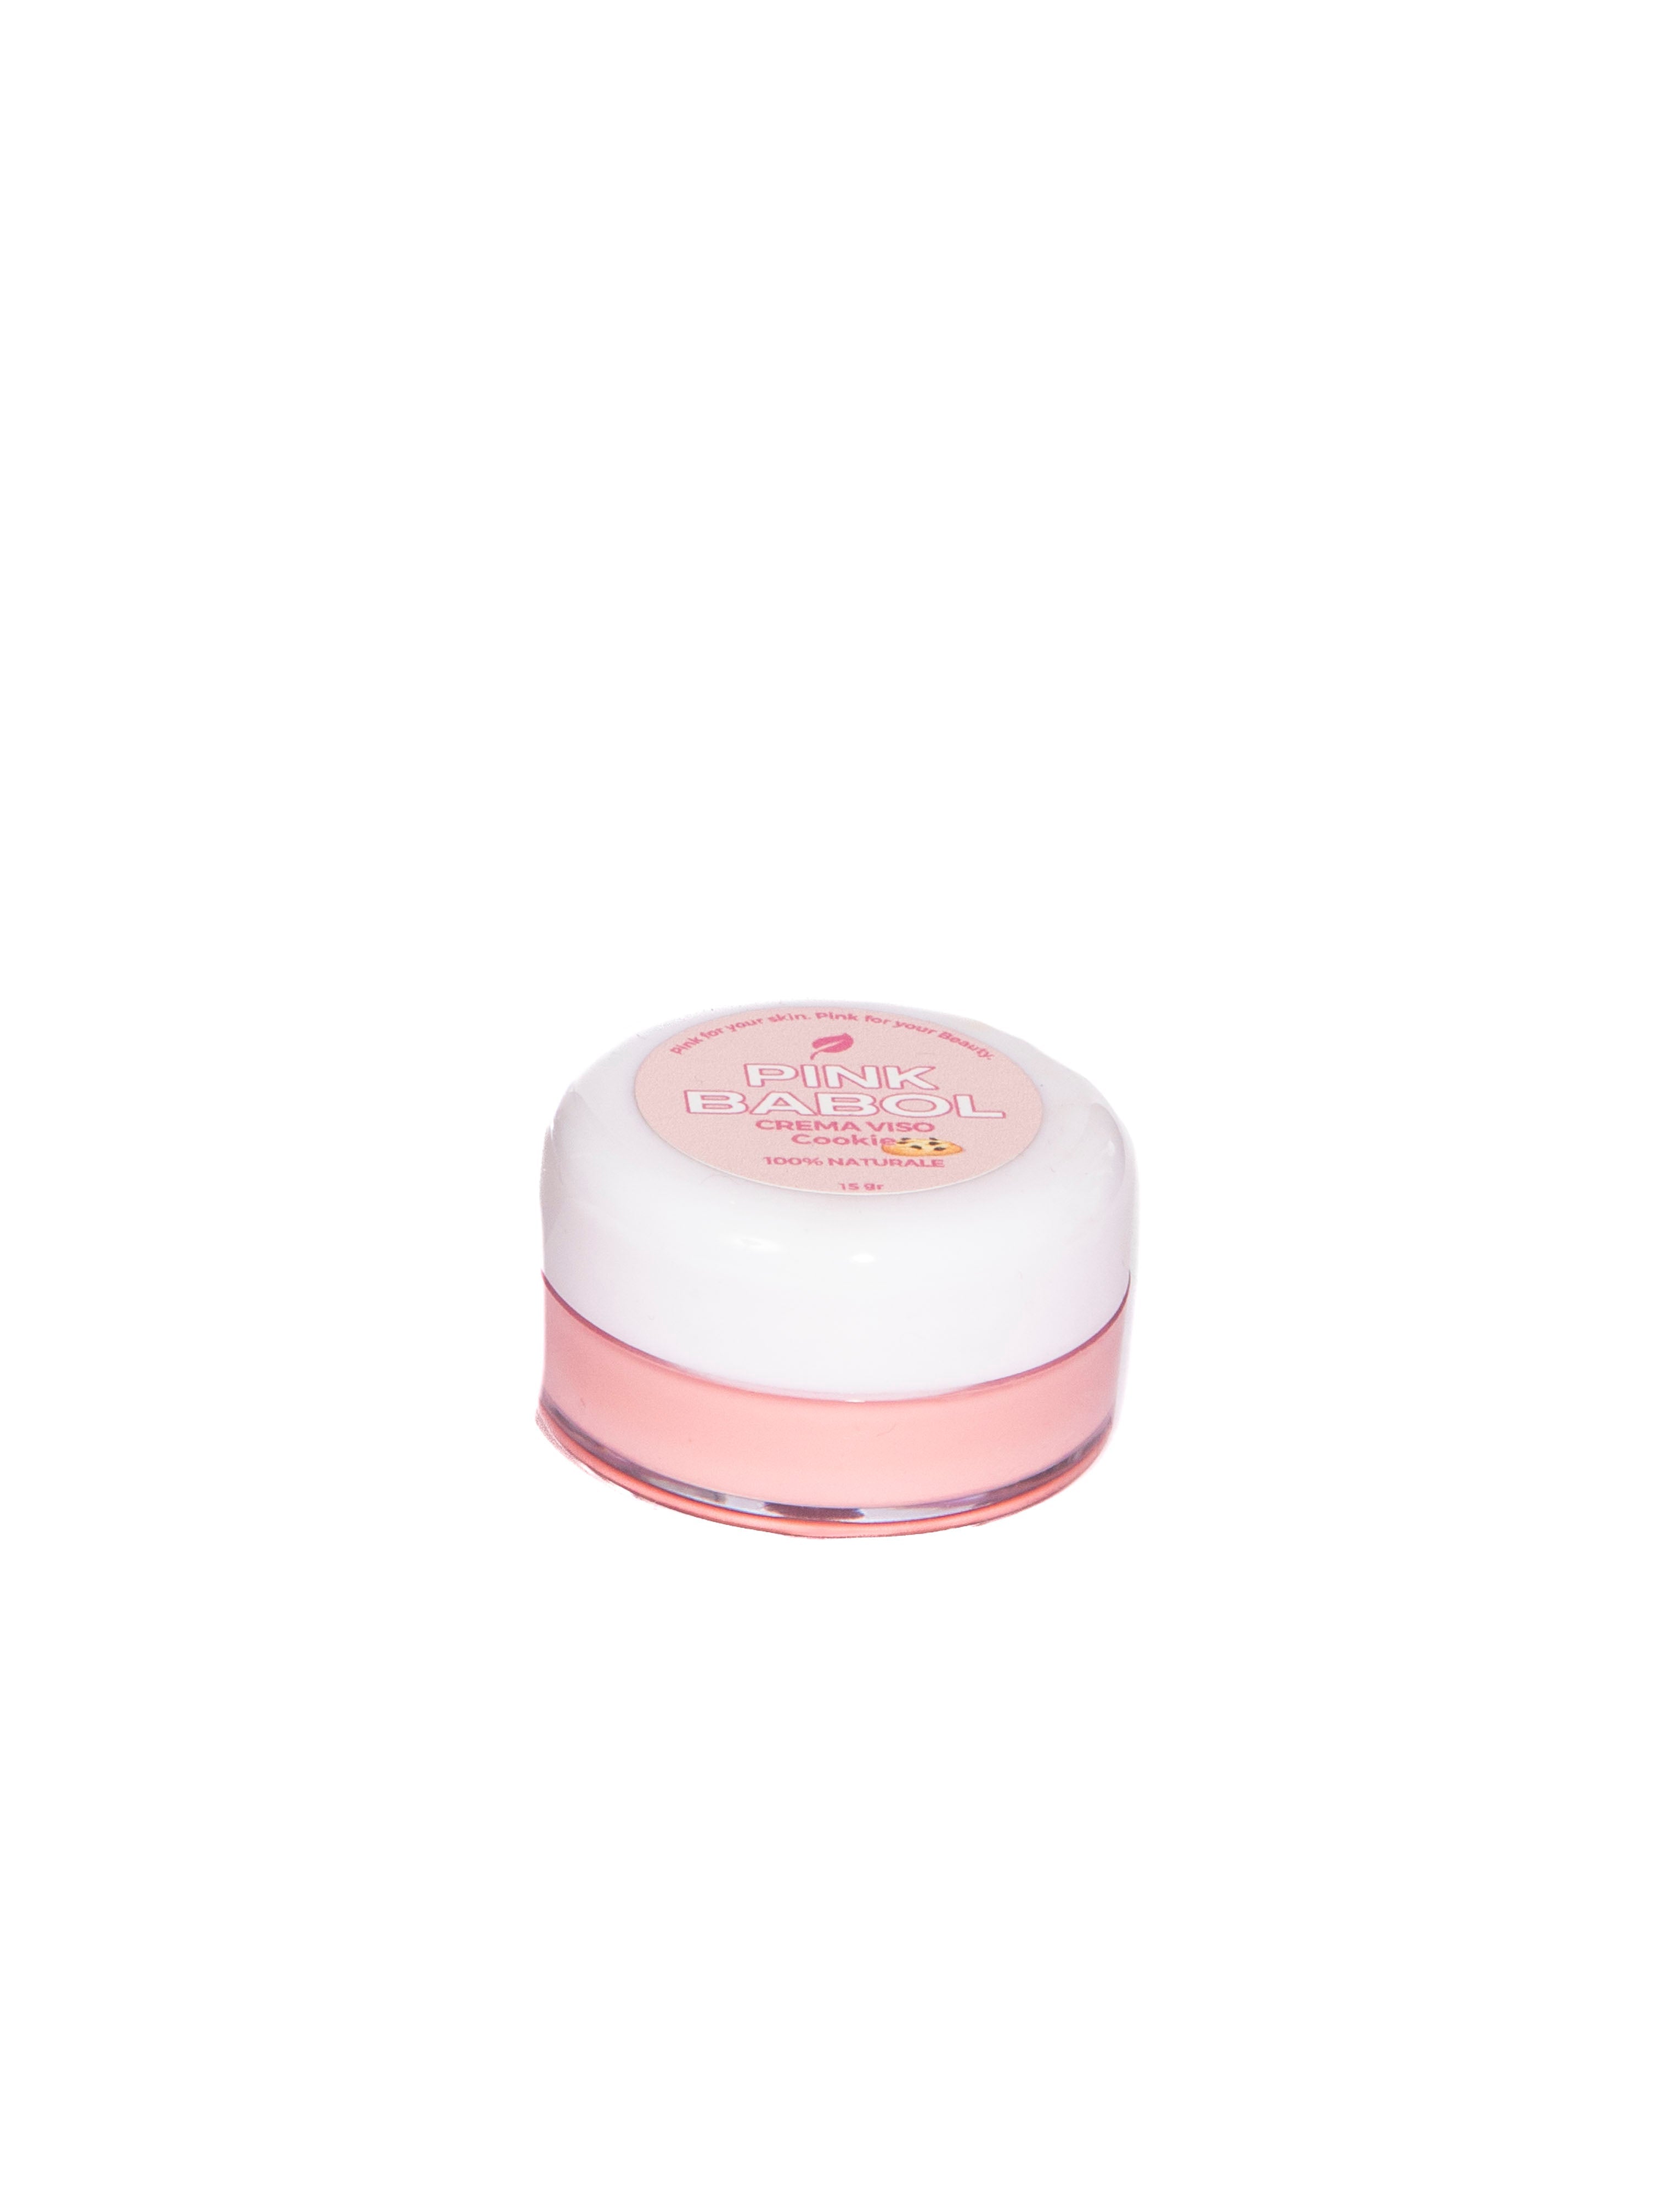 Crema idratante viso con acido ialuronico-Pink Babol